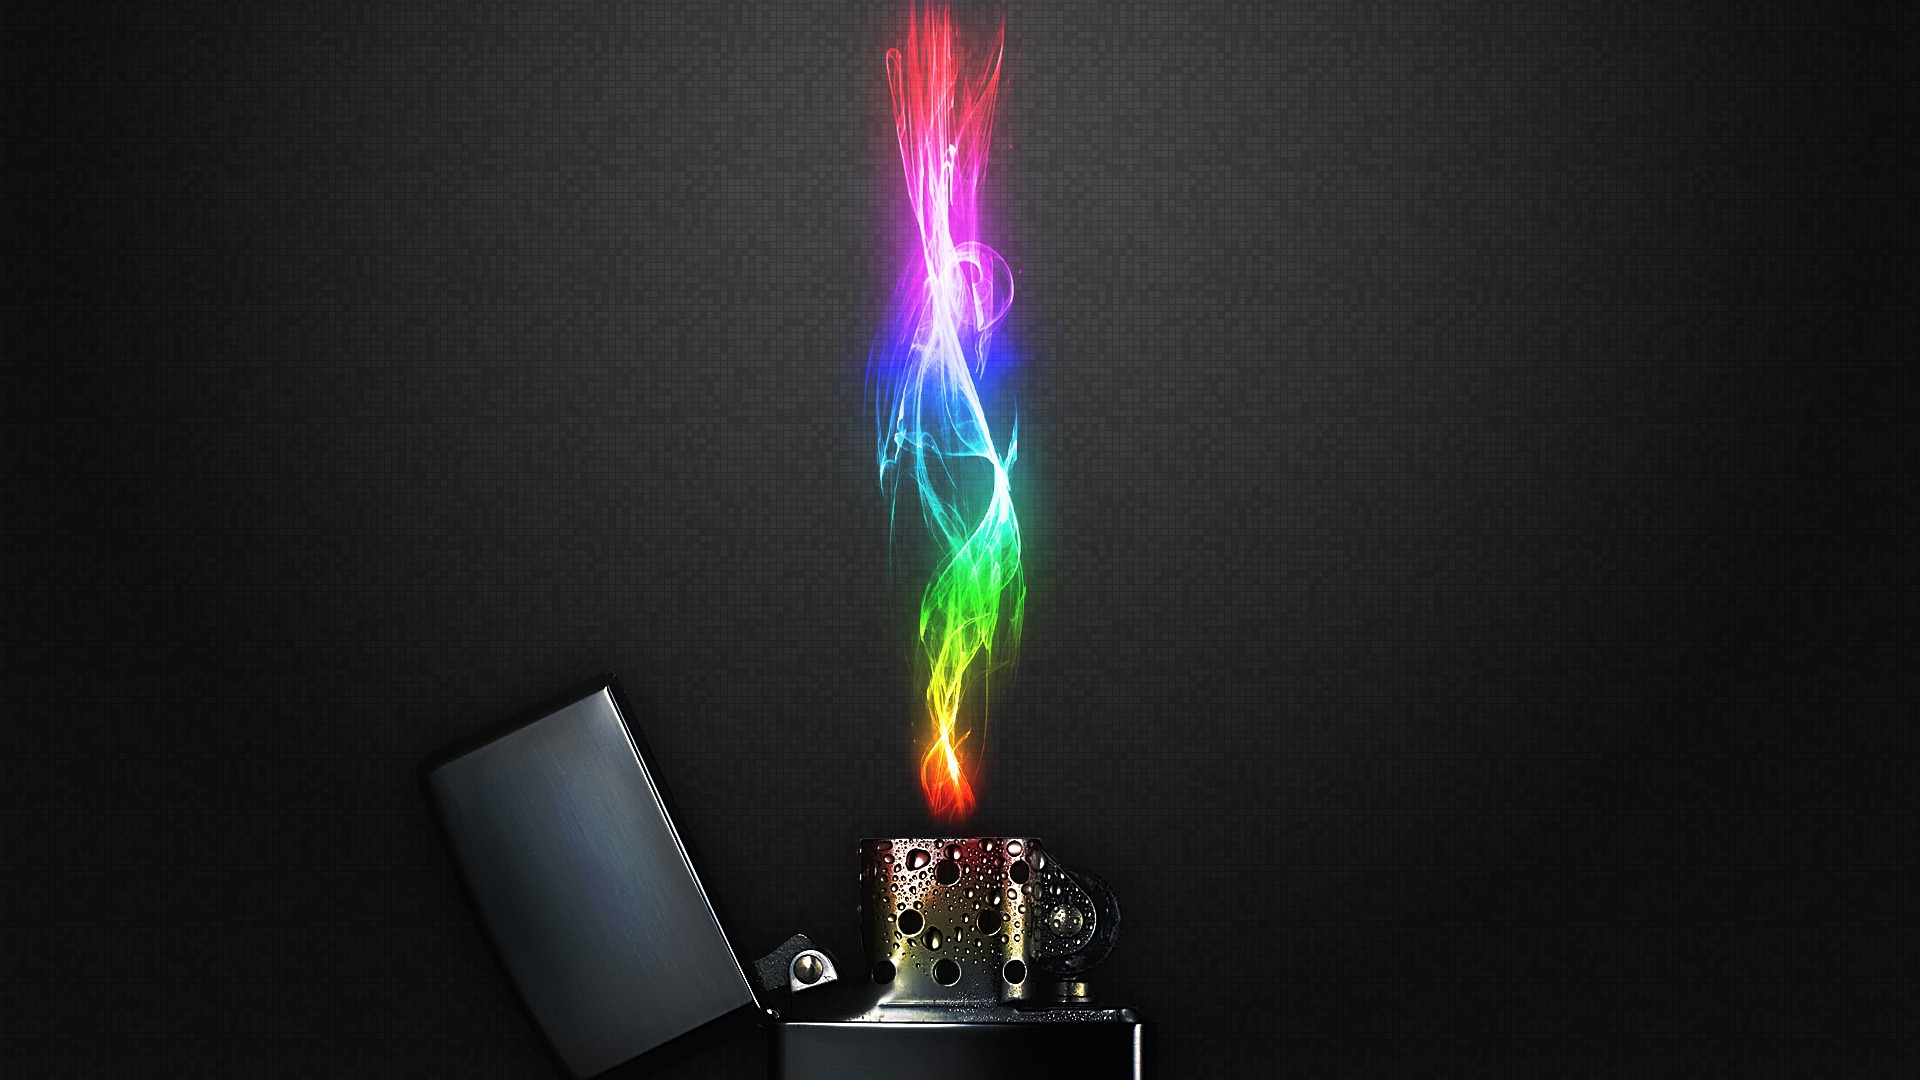 Rainbow Lighter for 1920 x 1080 HDTV 1080p resolution